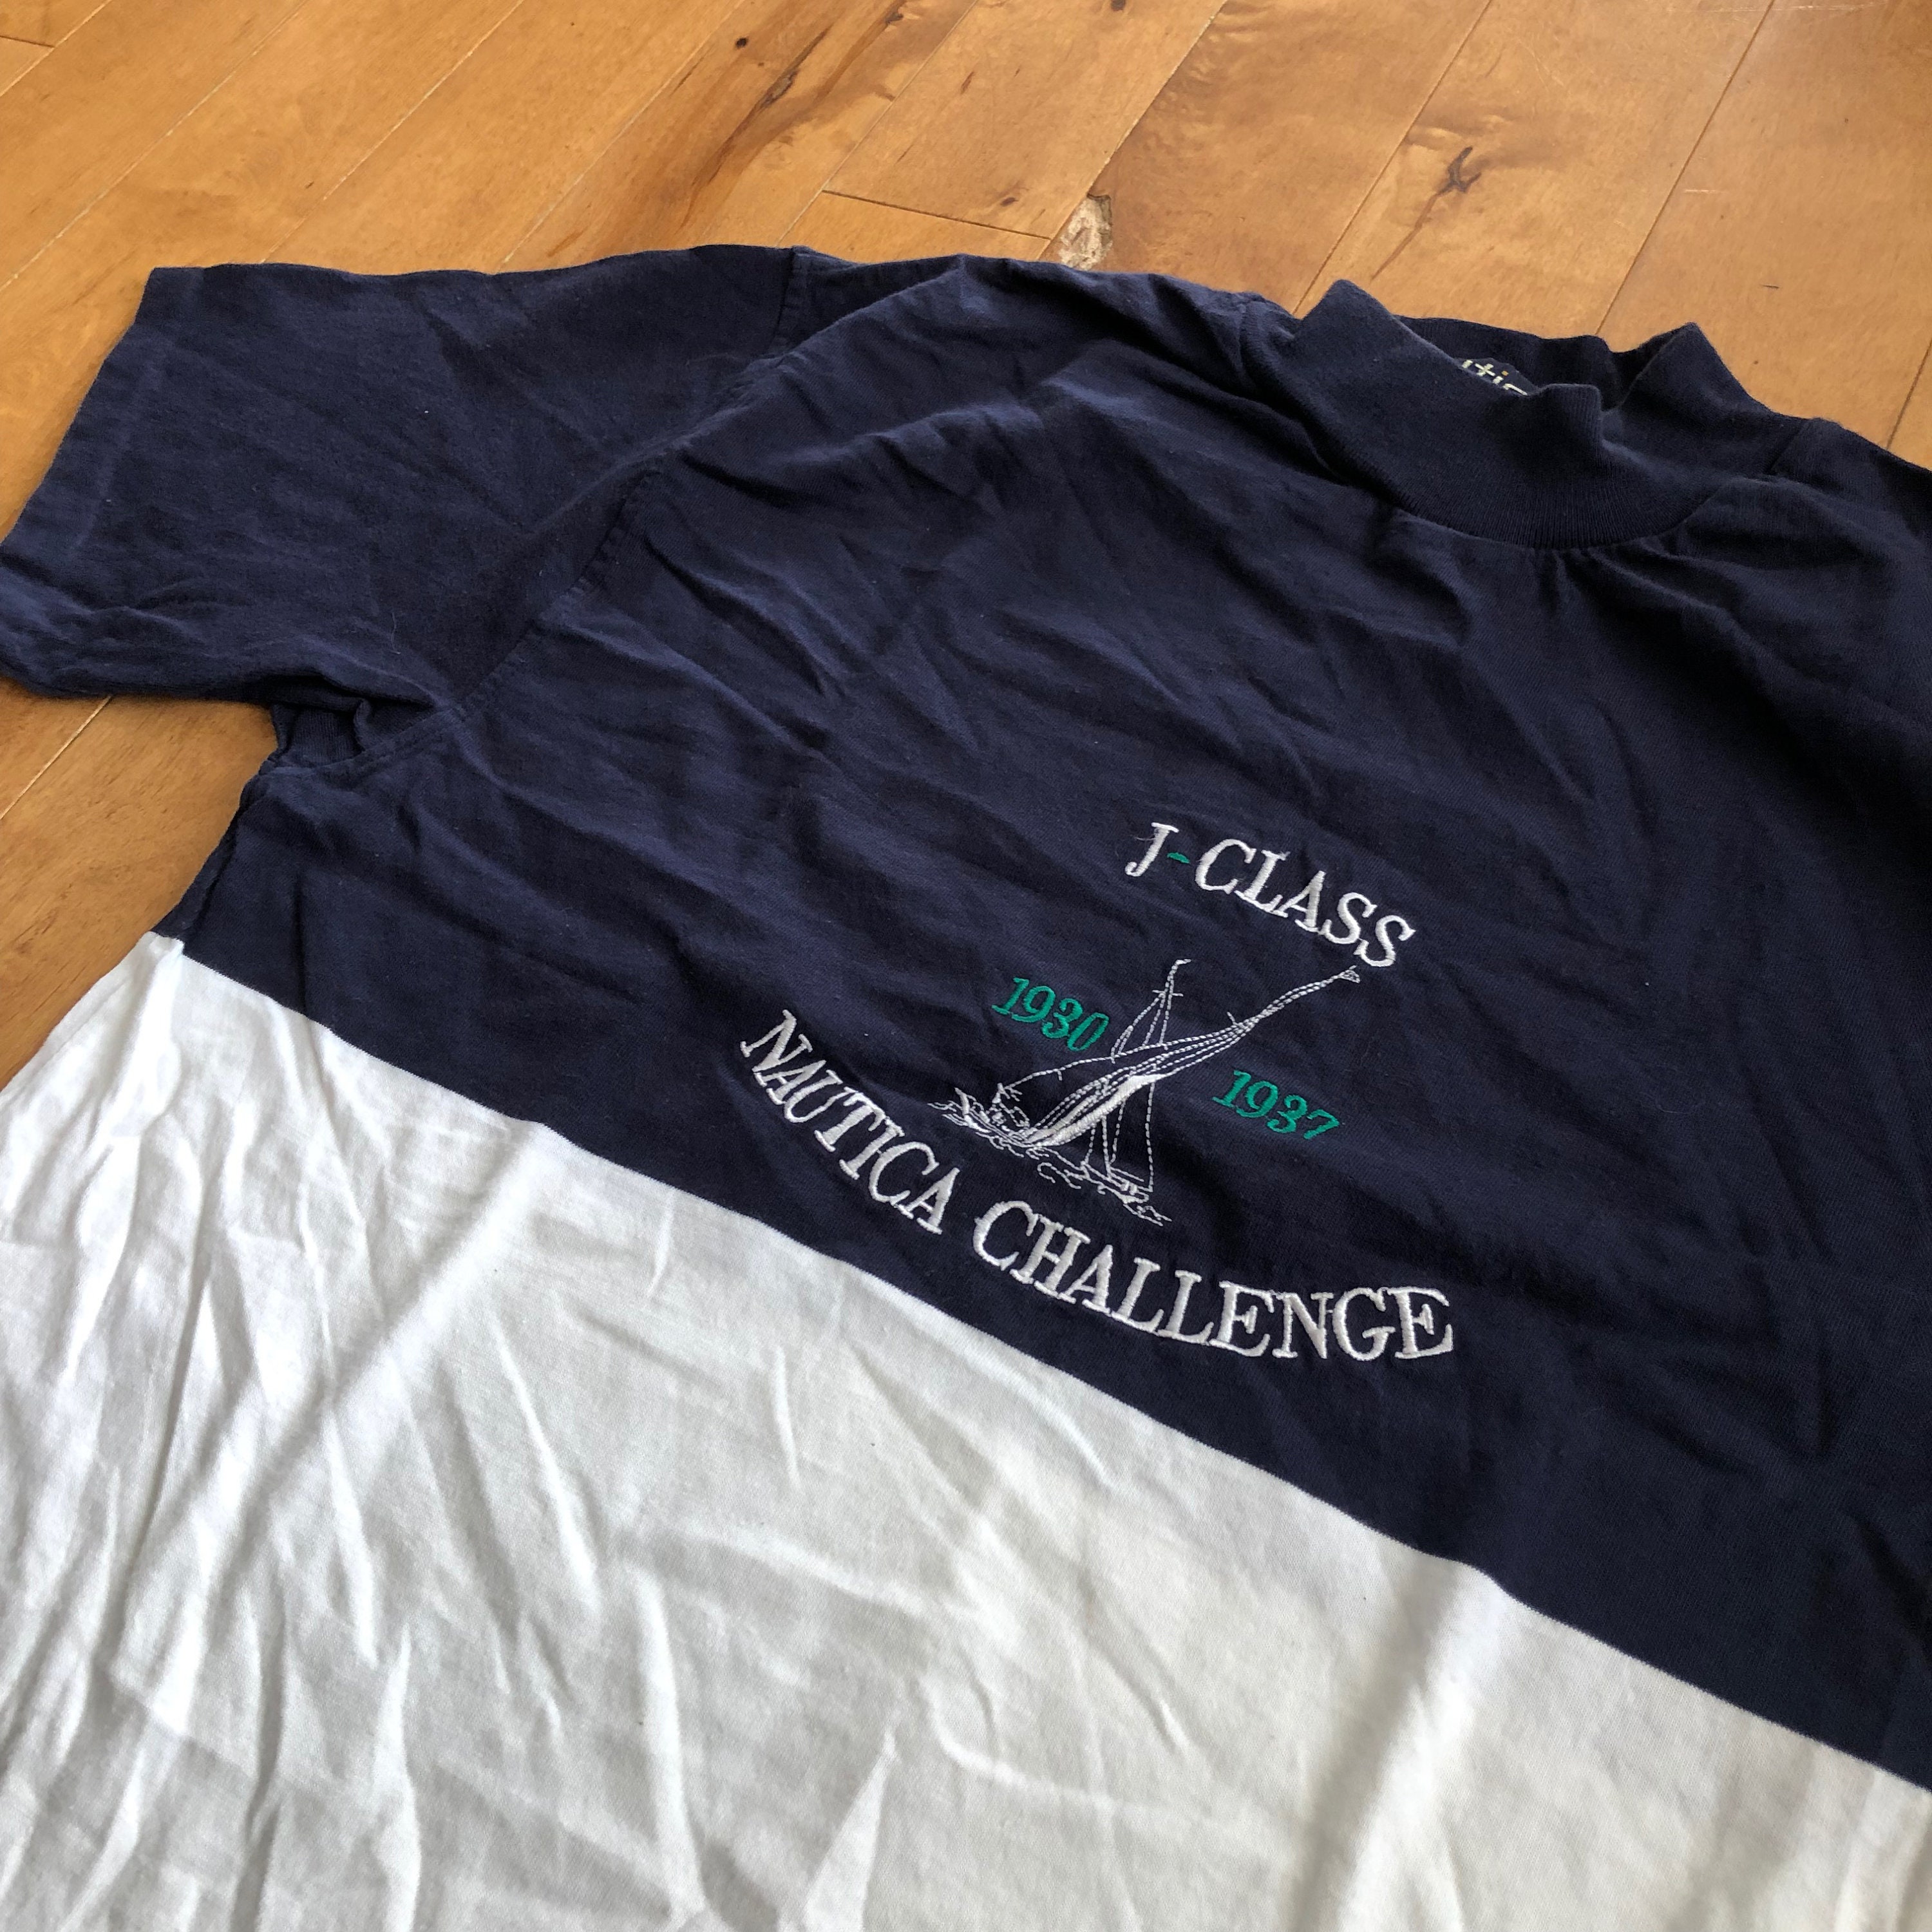 90s Nautica Shirt L Vintage Nautica T-shirt Large Nautica XCVI Large Logo  Spell Out Logo Bar Made in USA 100% Cotton Faded -  Hong Kong